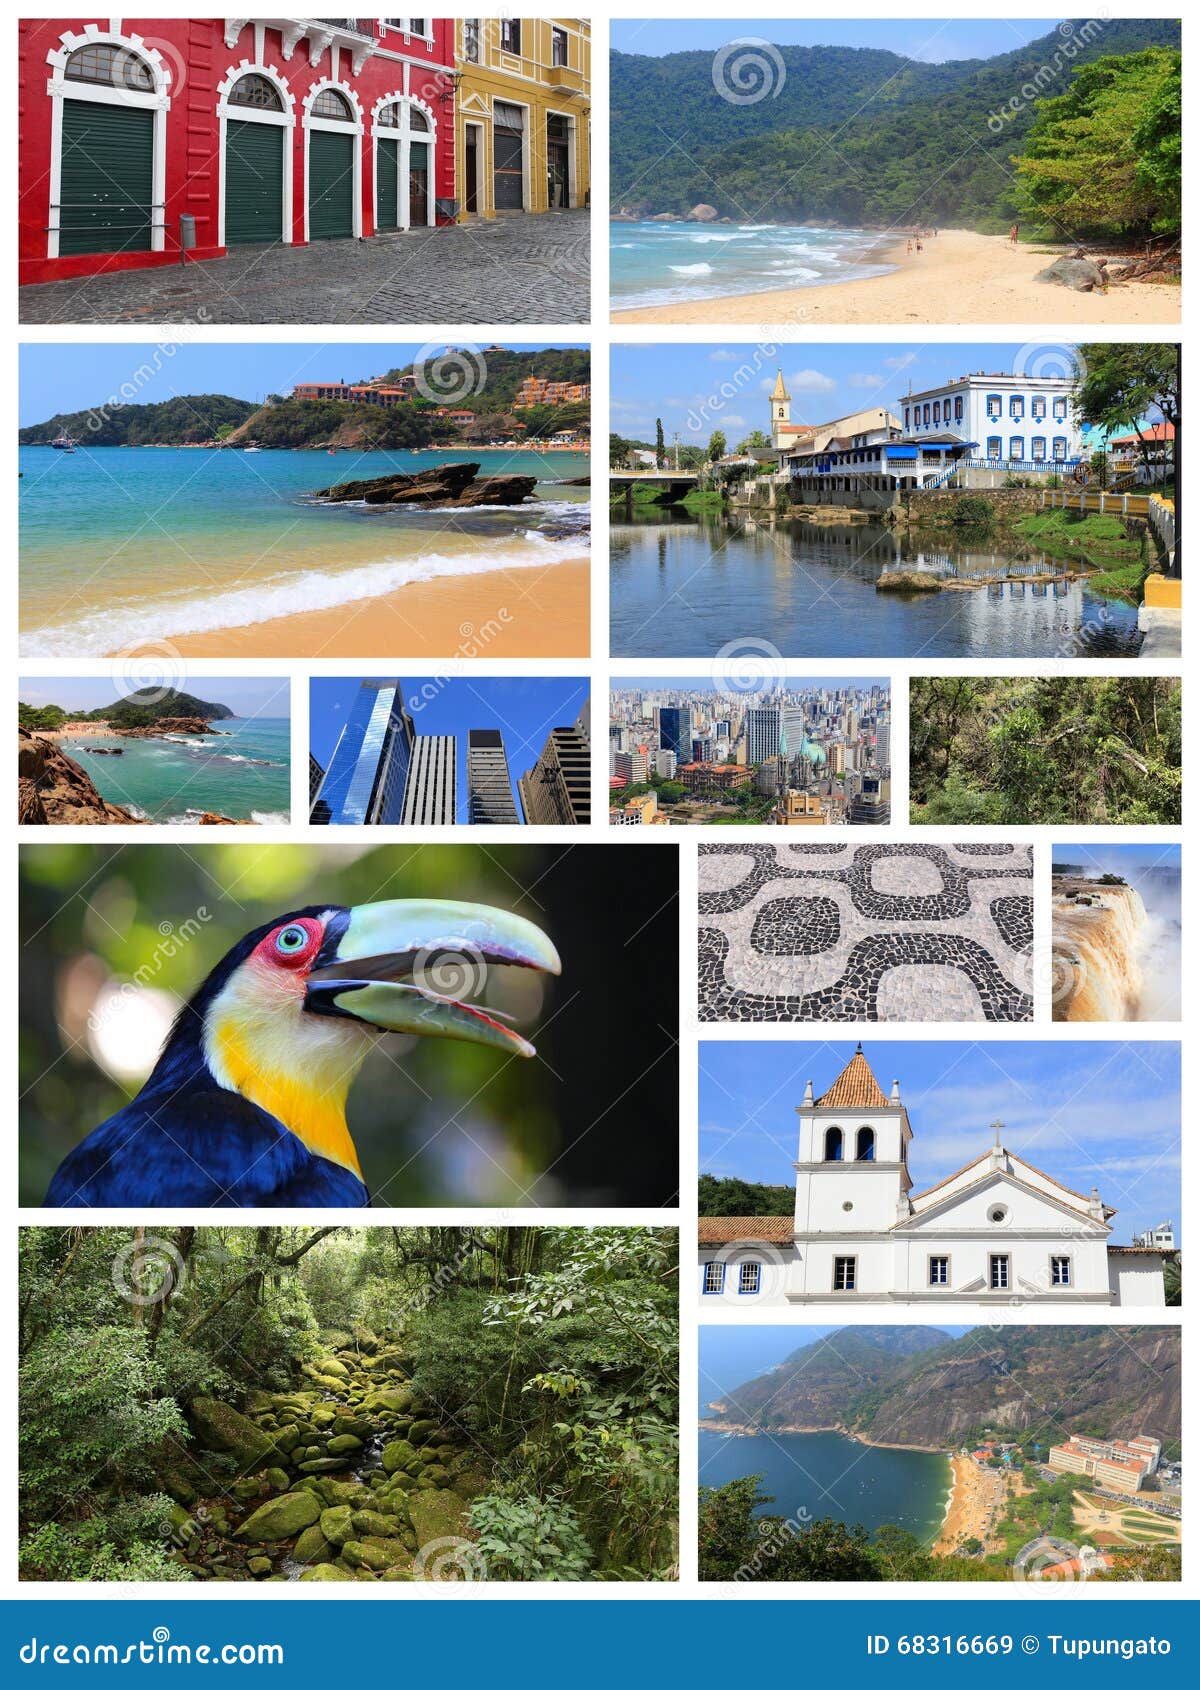 brazil postcard